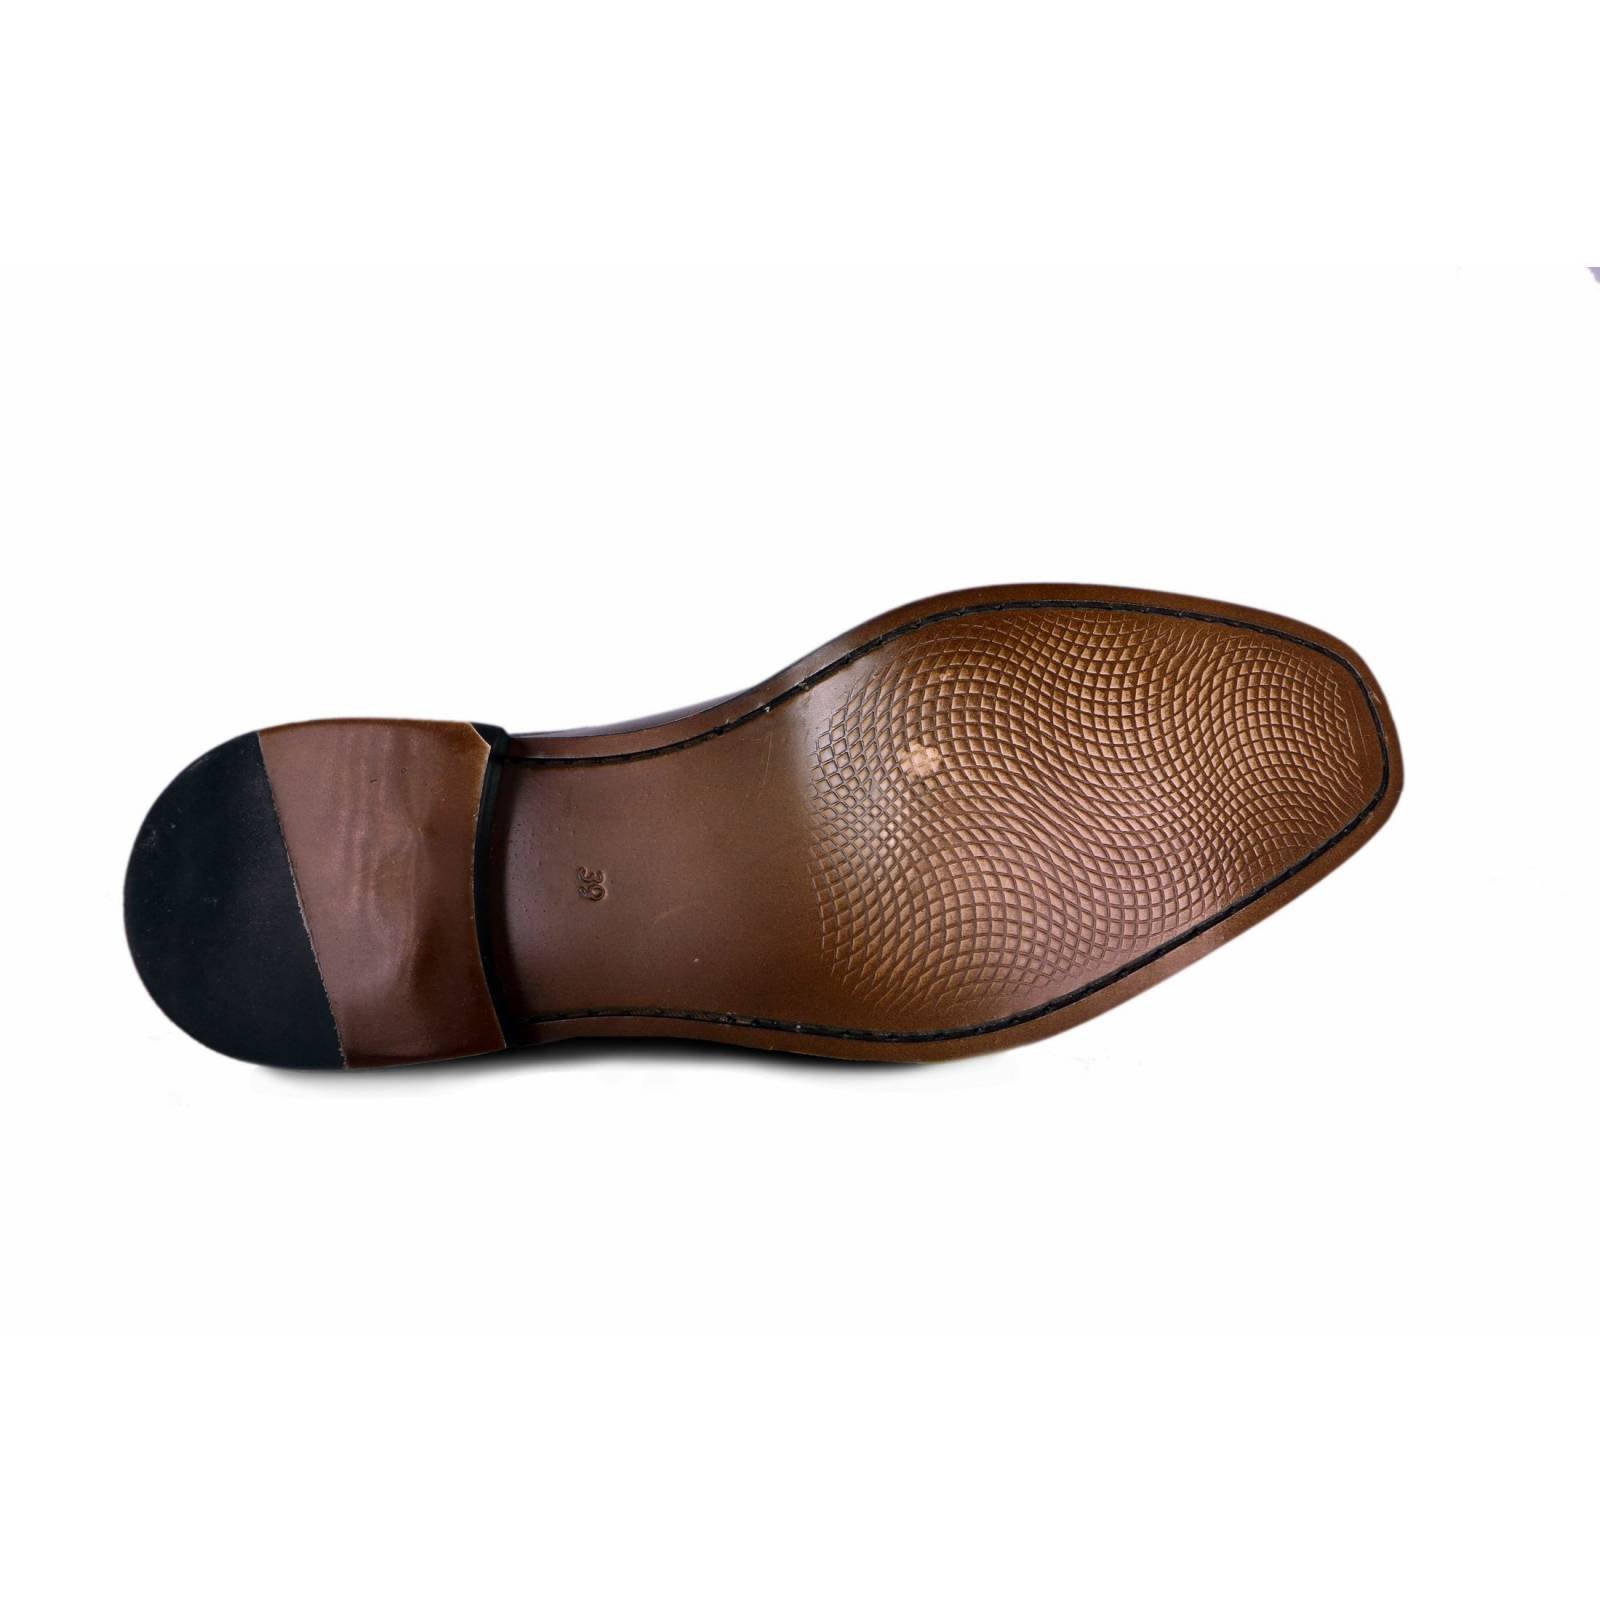 Zapato Formal Elegant Negro Max Denegri +7cms De Altura